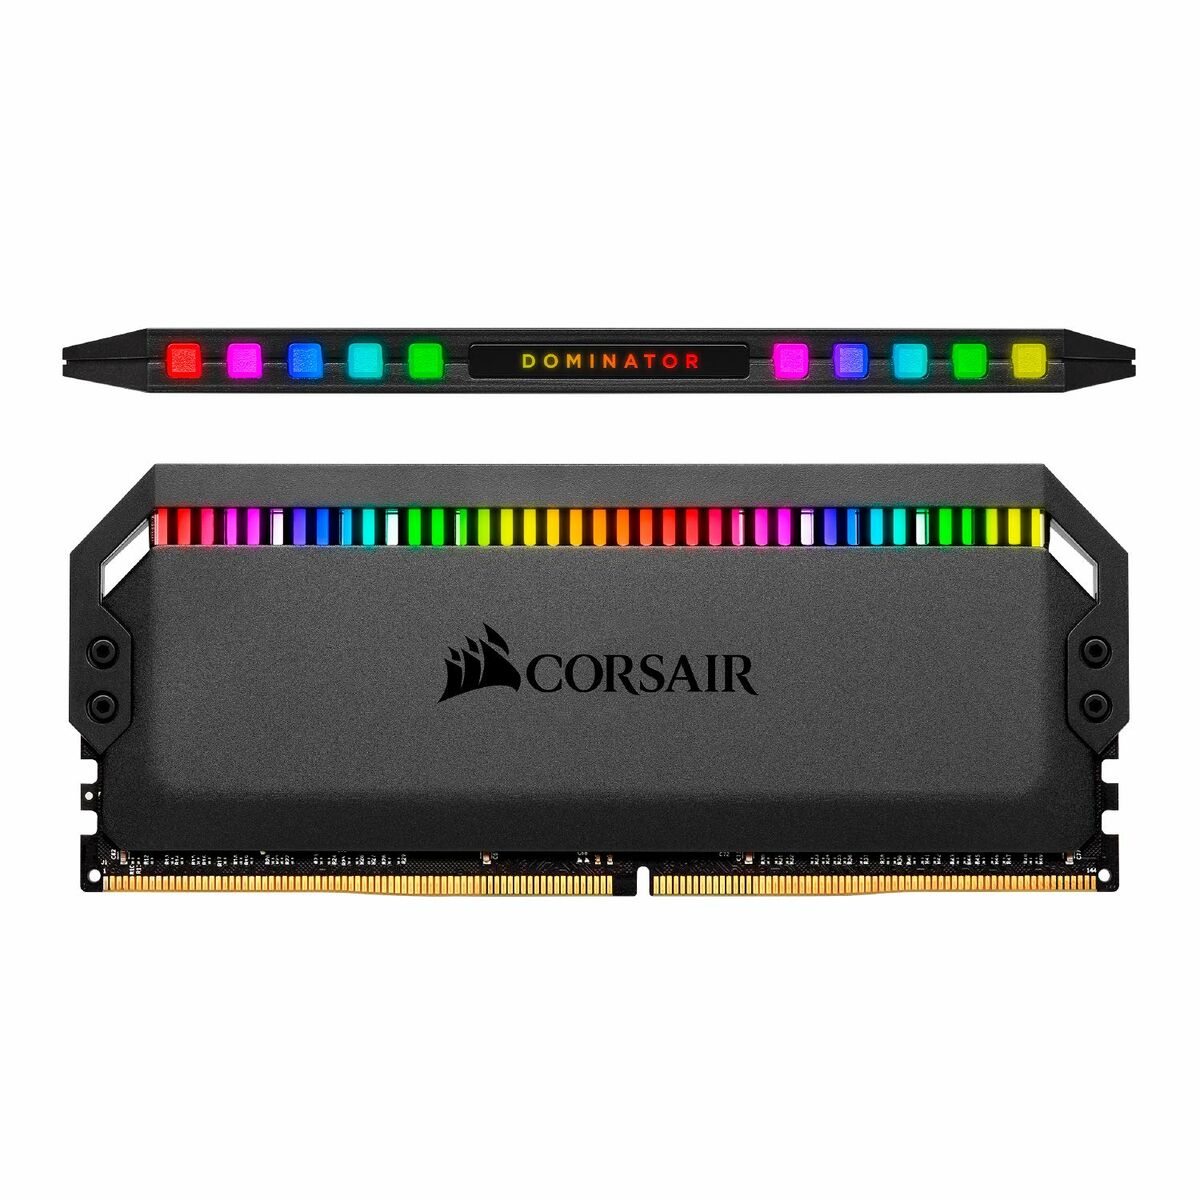 RAM Memory Corsair Platinum RGB CL16 3200 MHz